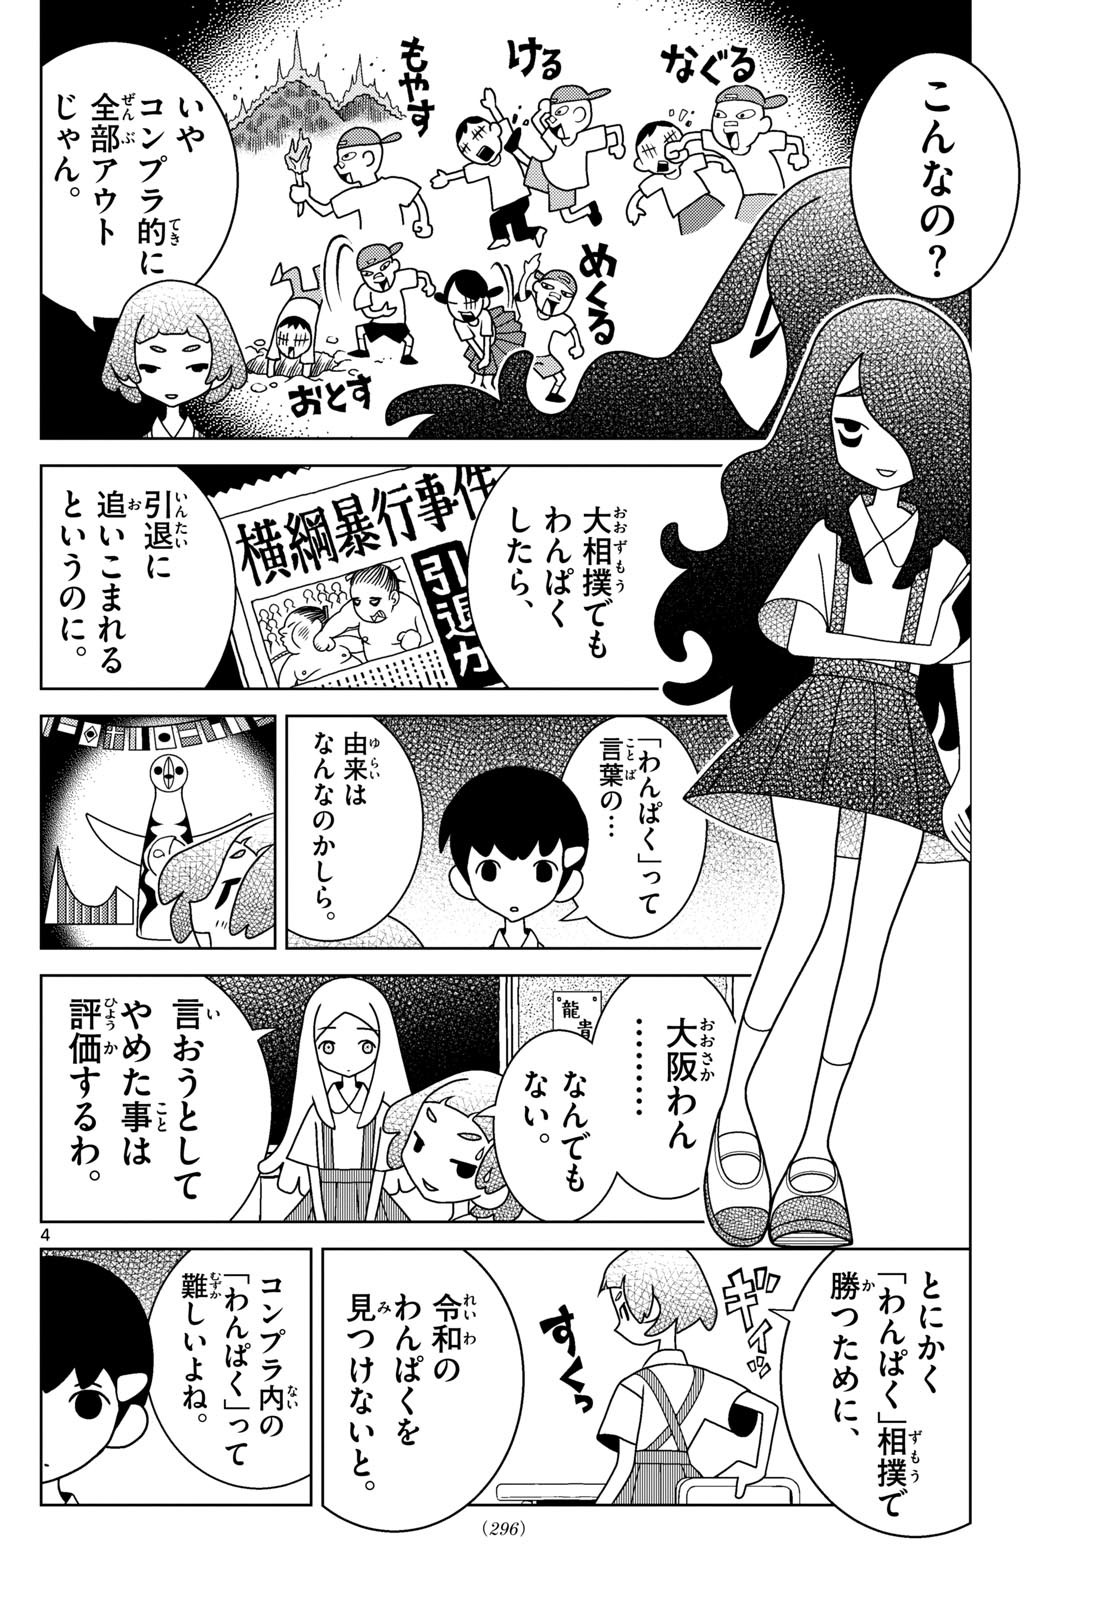 Shibuya Near Family - Chapter 064 - Page 4